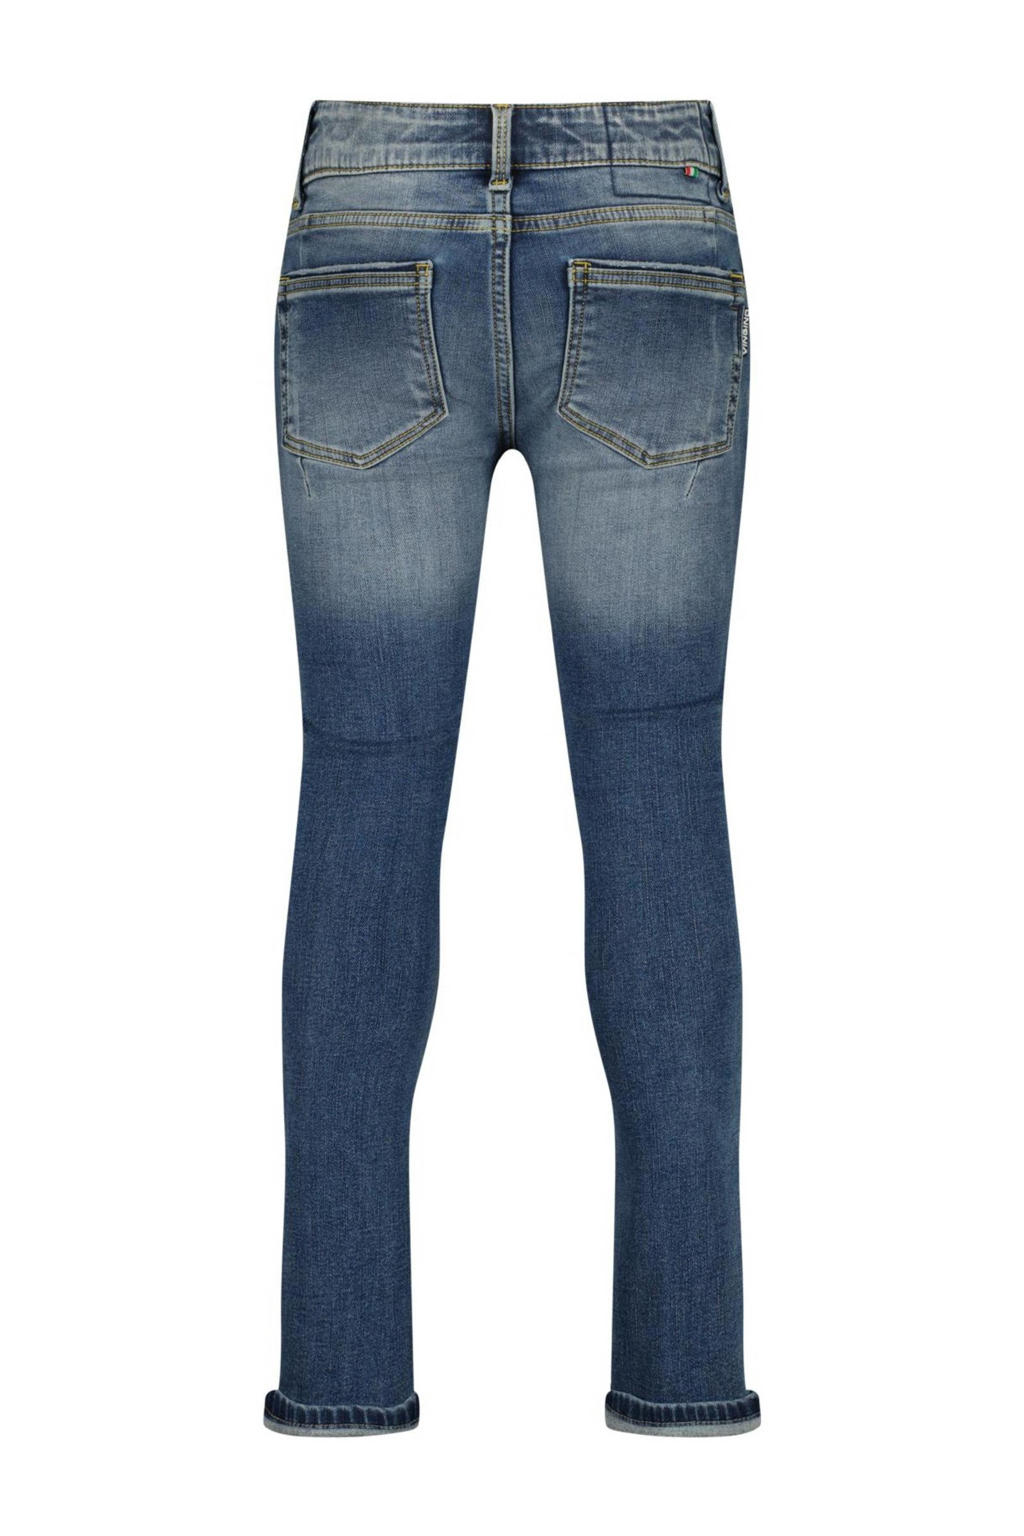 Vingino skinny jeans Amos dark blue denim | kleertjes.com